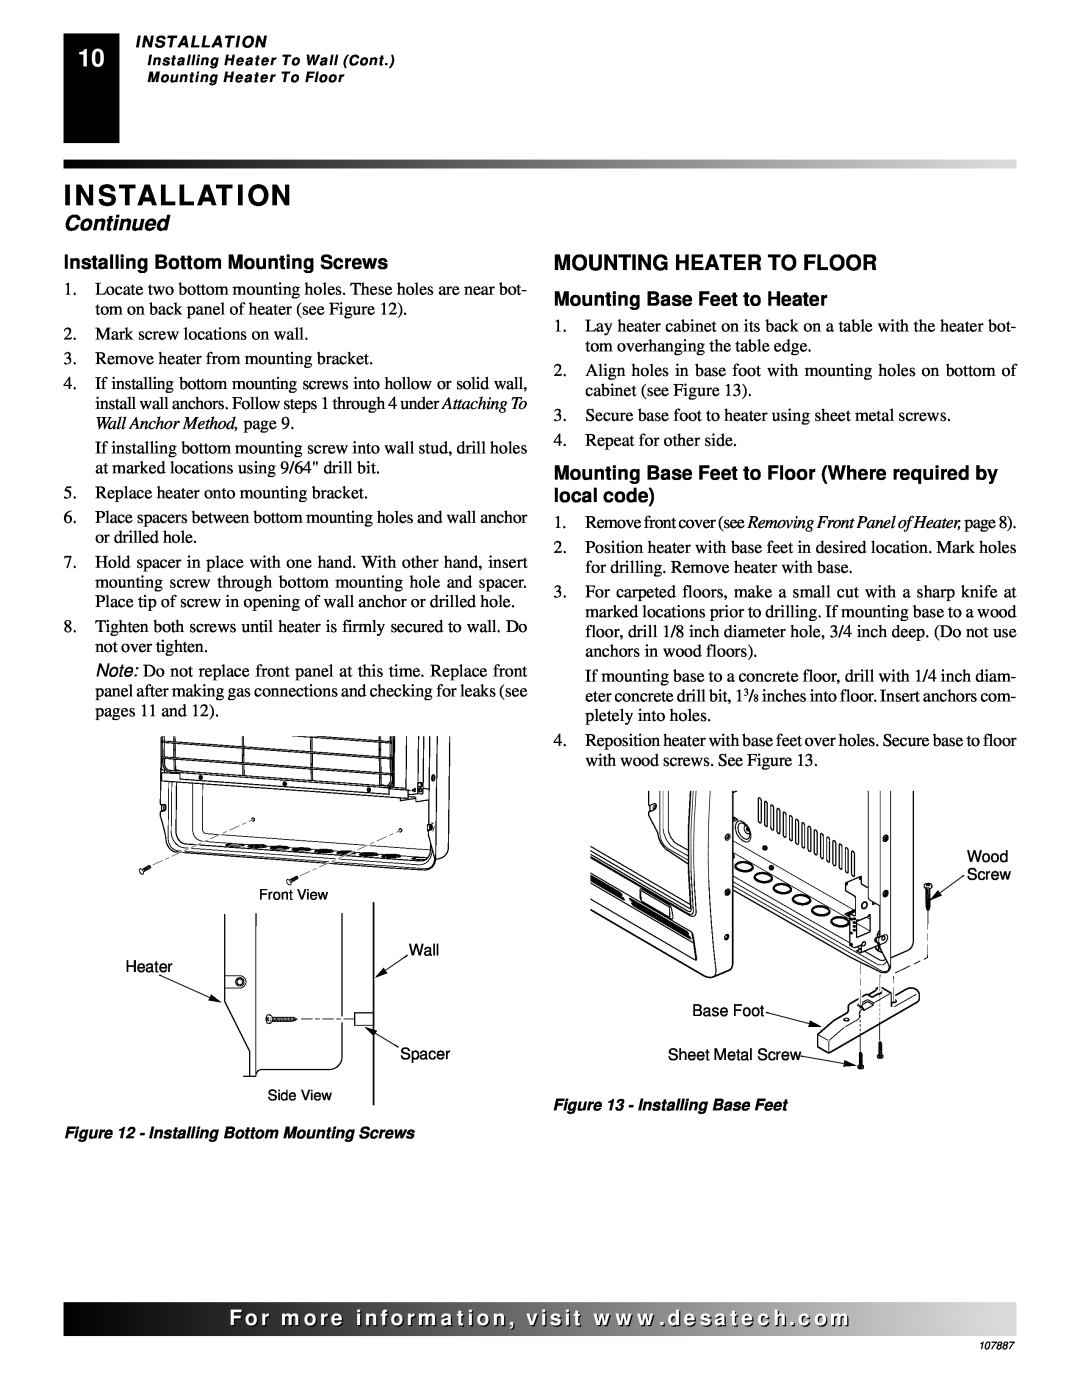 Vanguard Heating VP16IT, VP26T Mounting Heater To Floor, Installing Bottom Mounting Screws, Mounting Base Feet to Heater 